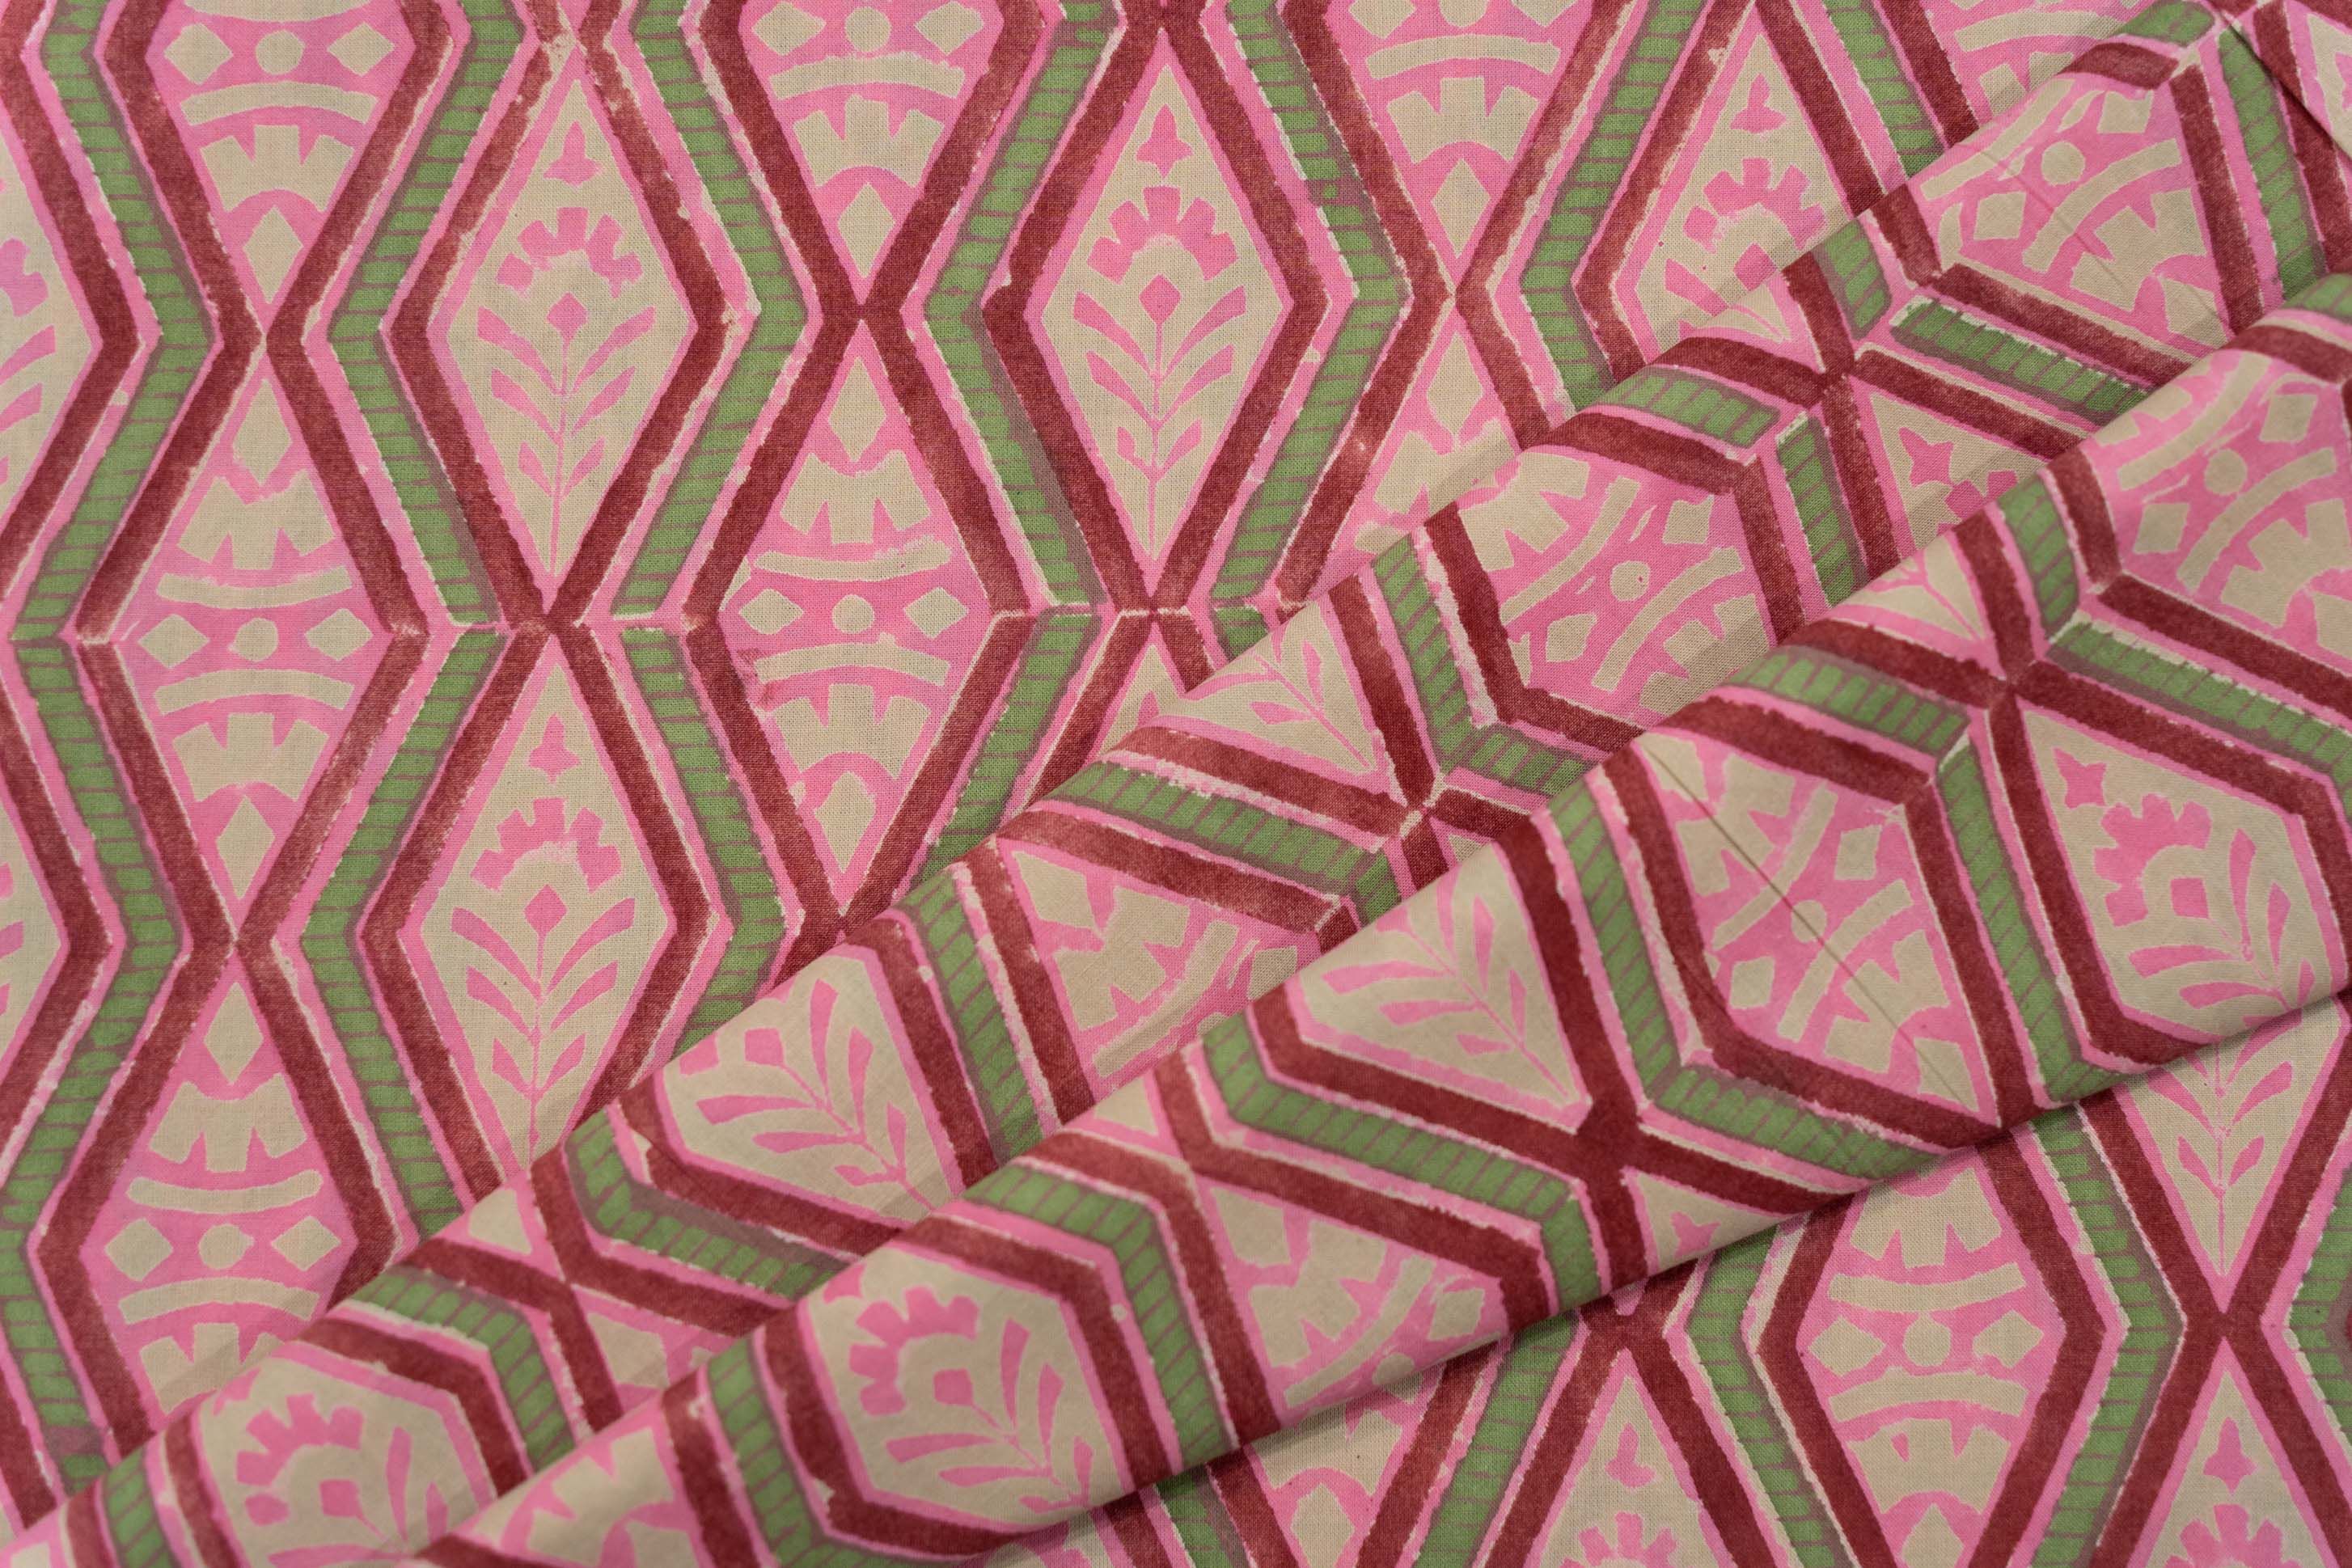 Geometric Block Printed Cotton Fabric